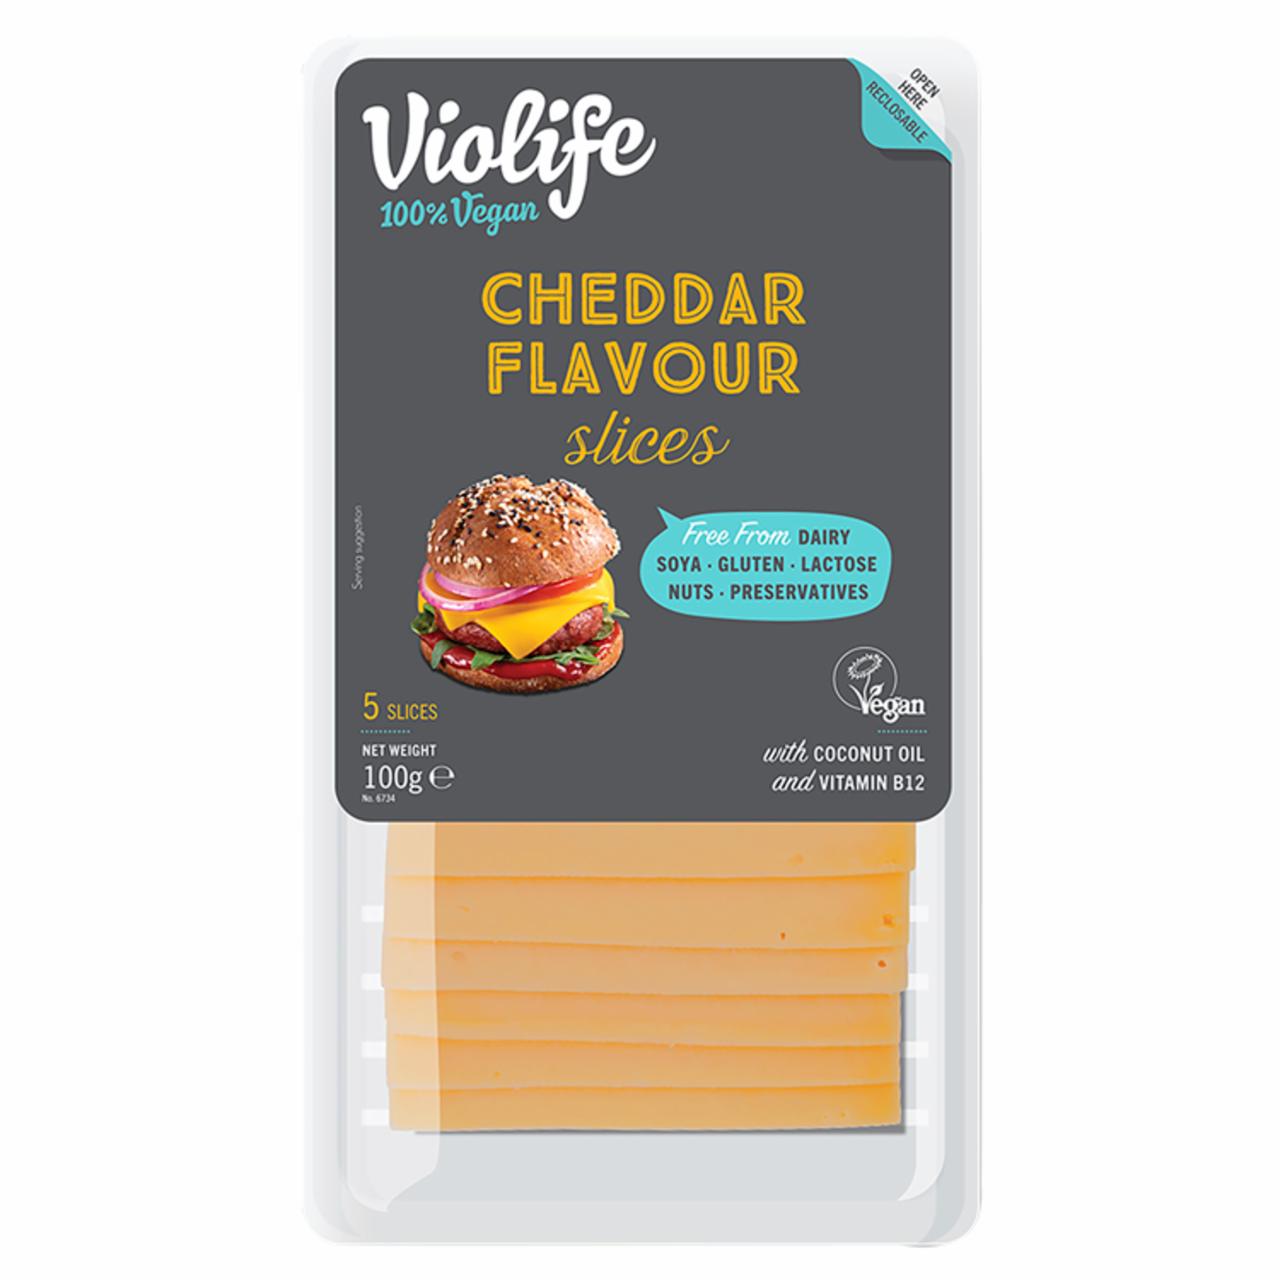 Zdjęcia - Cheddar flavour slices 100% vegan Violife